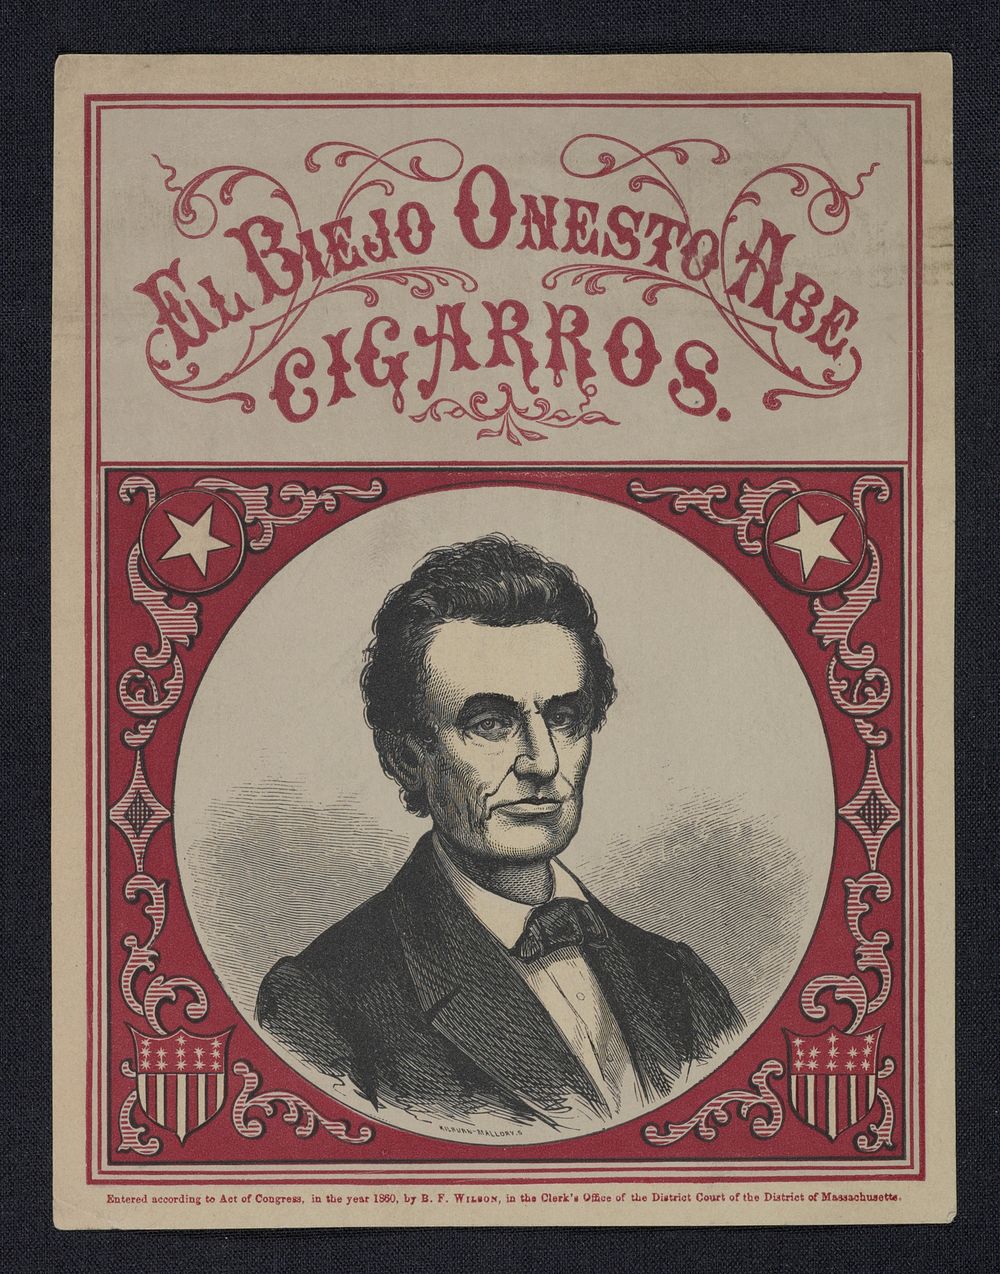 Abraham Lincoln papers: Series 4. Addenda, 1774-1948: Cigar label, "El Biejo Onesto Abe Cigarros", 1860